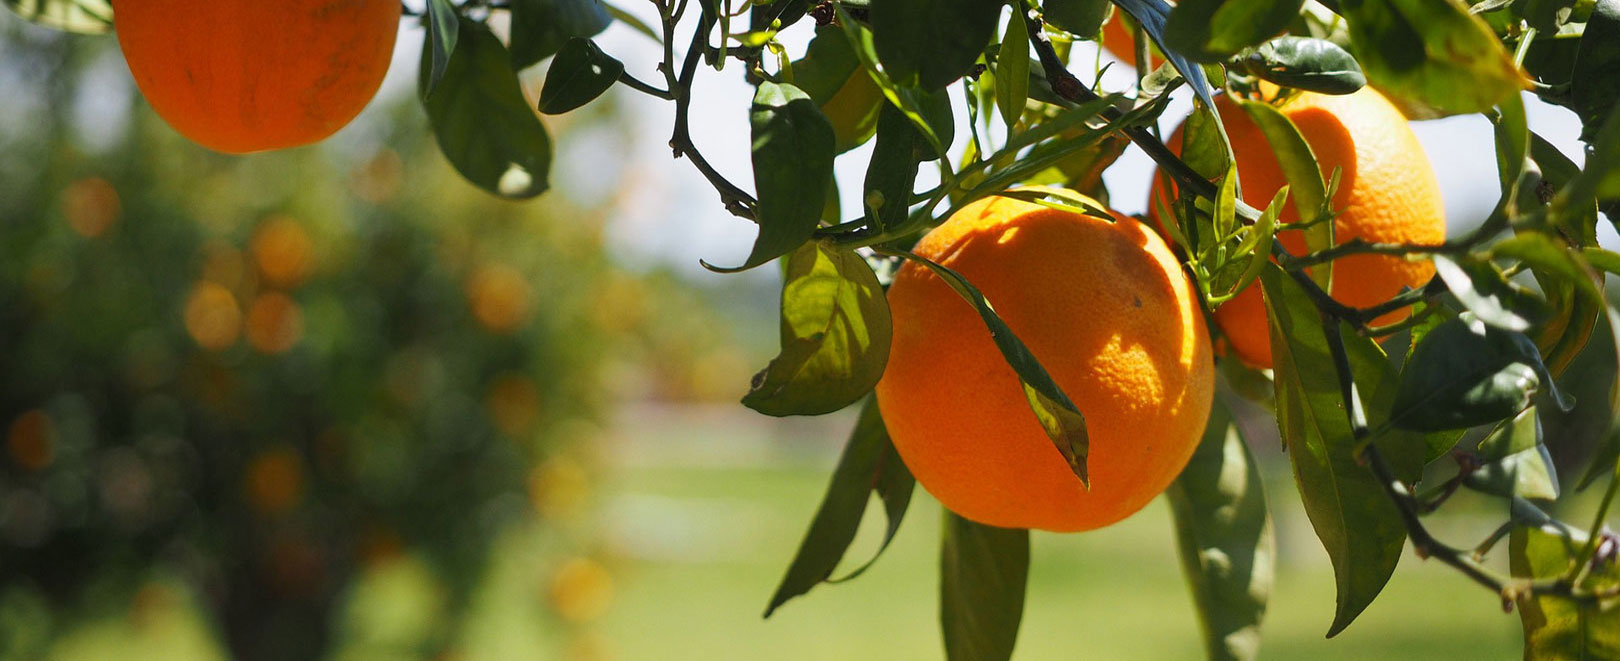 The oranges of San Giuseppe